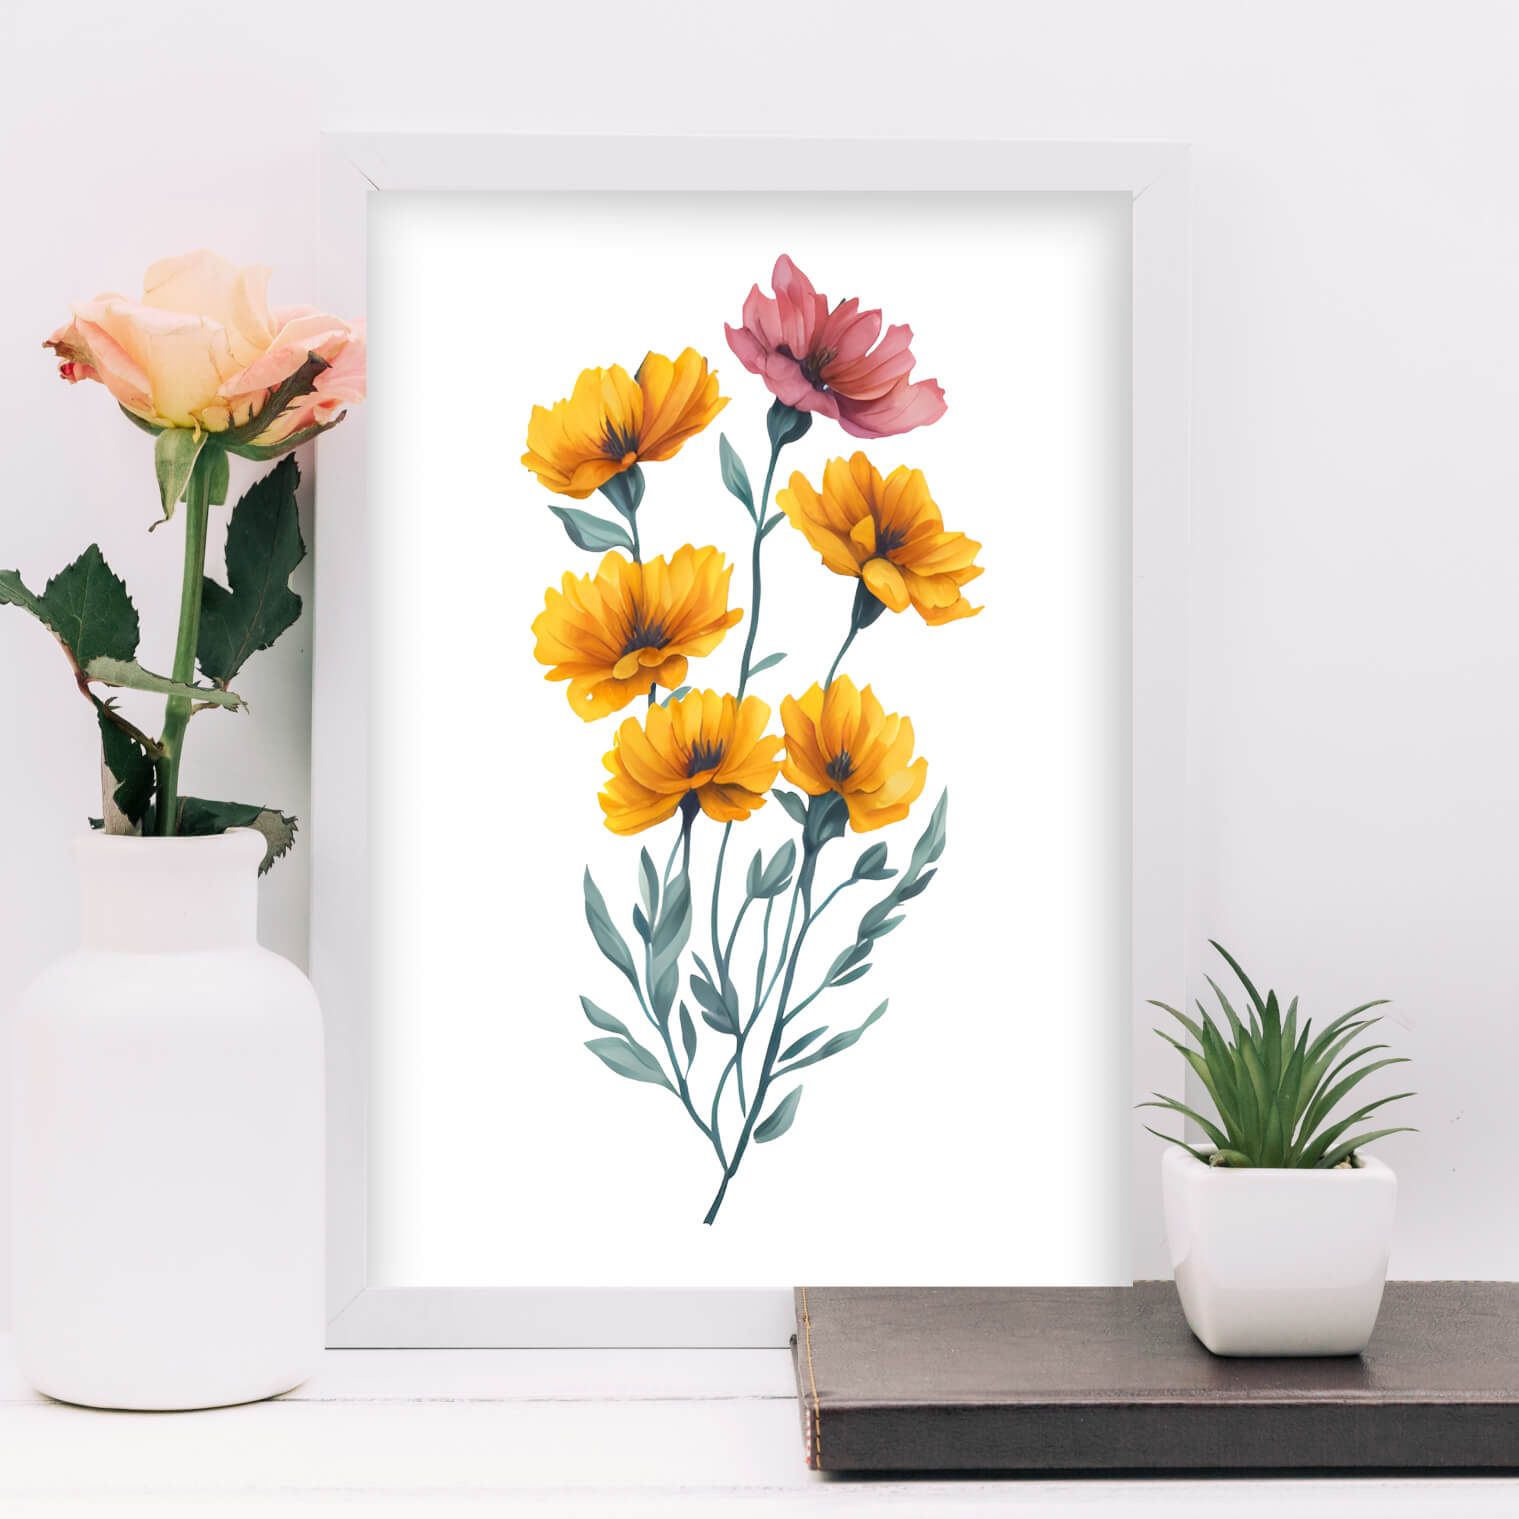 Sunflower Painting Trio - Digital Wall Art Set of 3